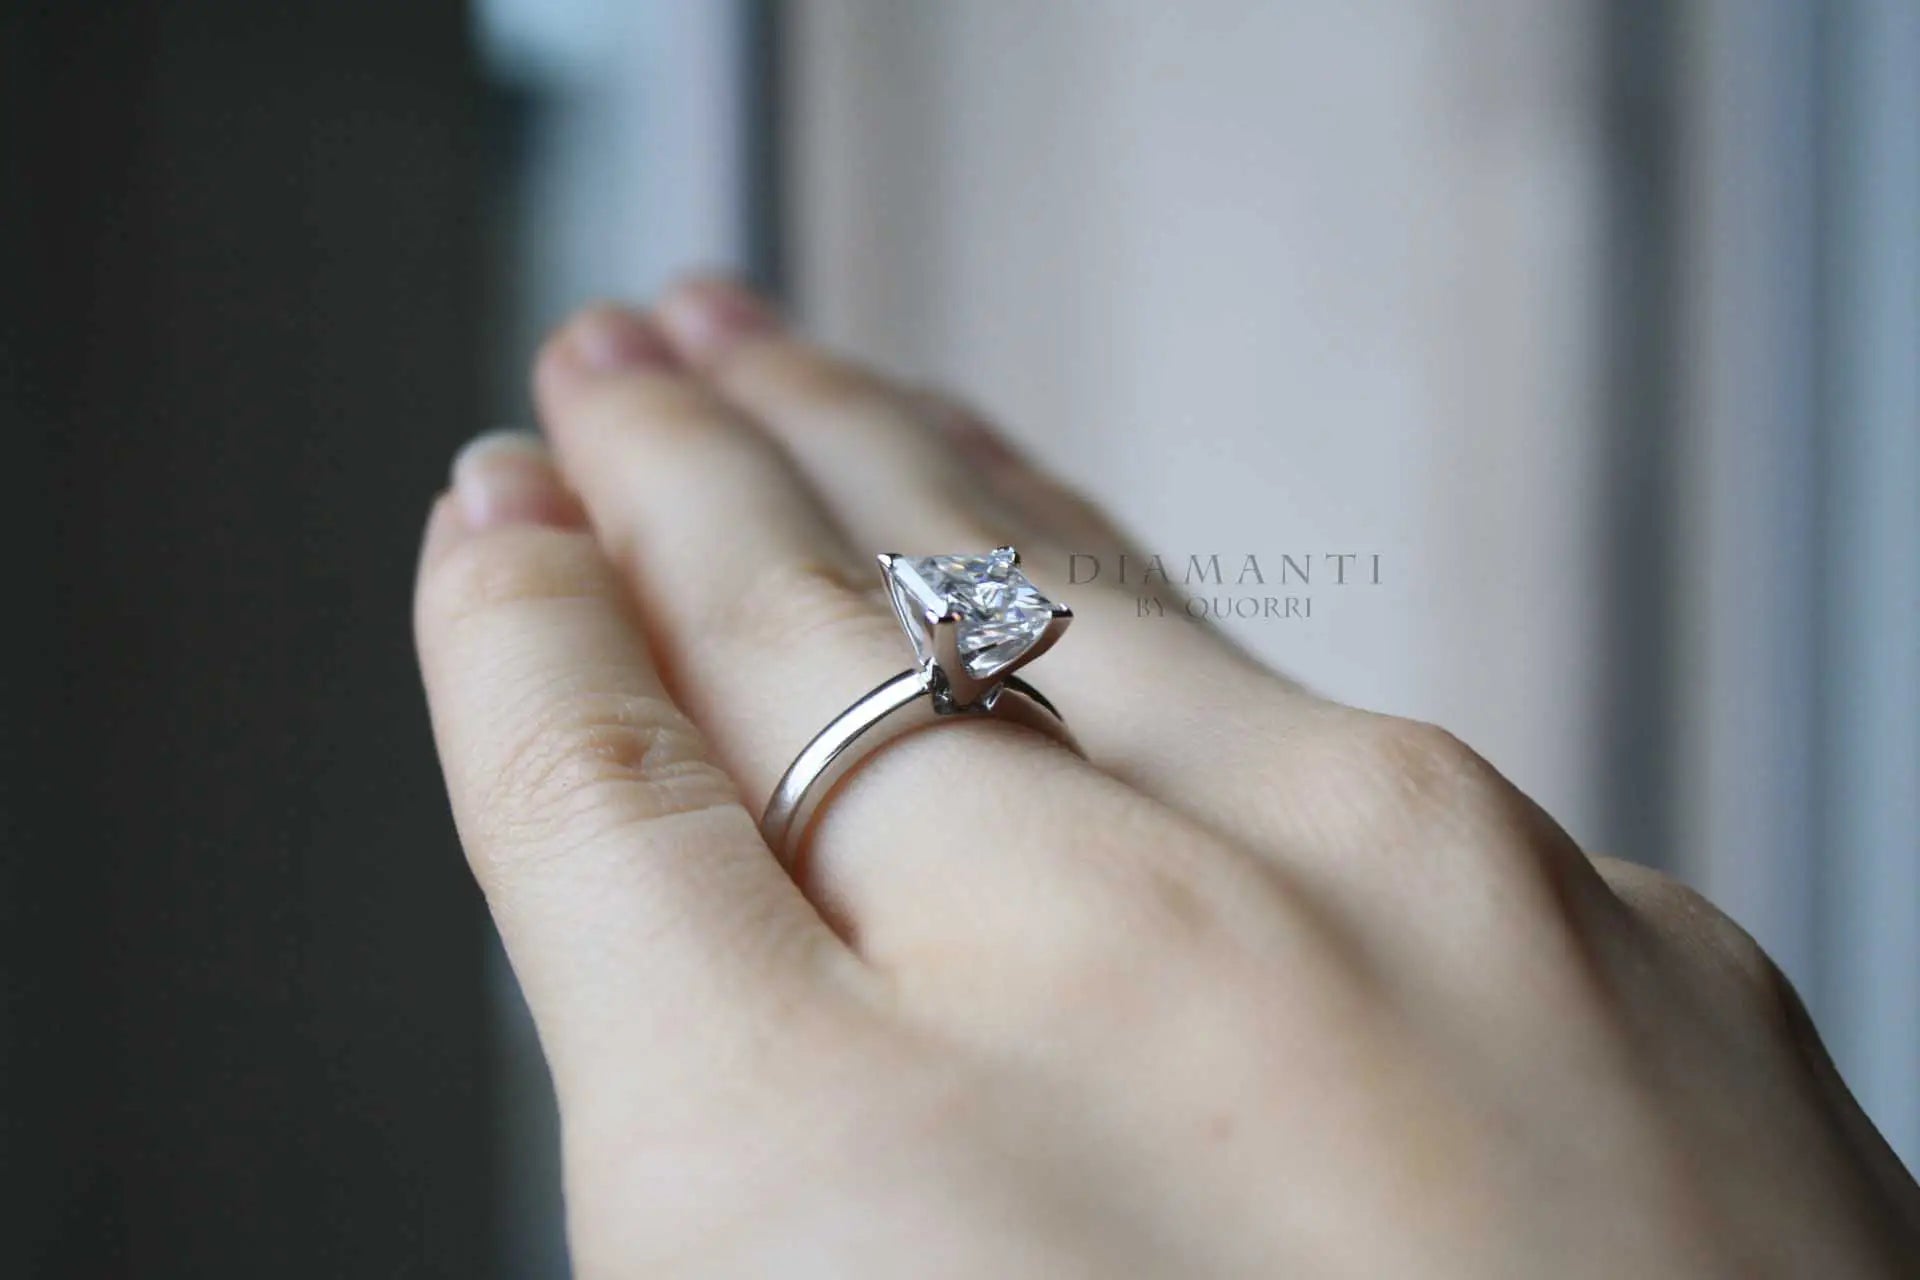 v prong princess cut lab grown diamond solitaire engagement ring Quorri Canada